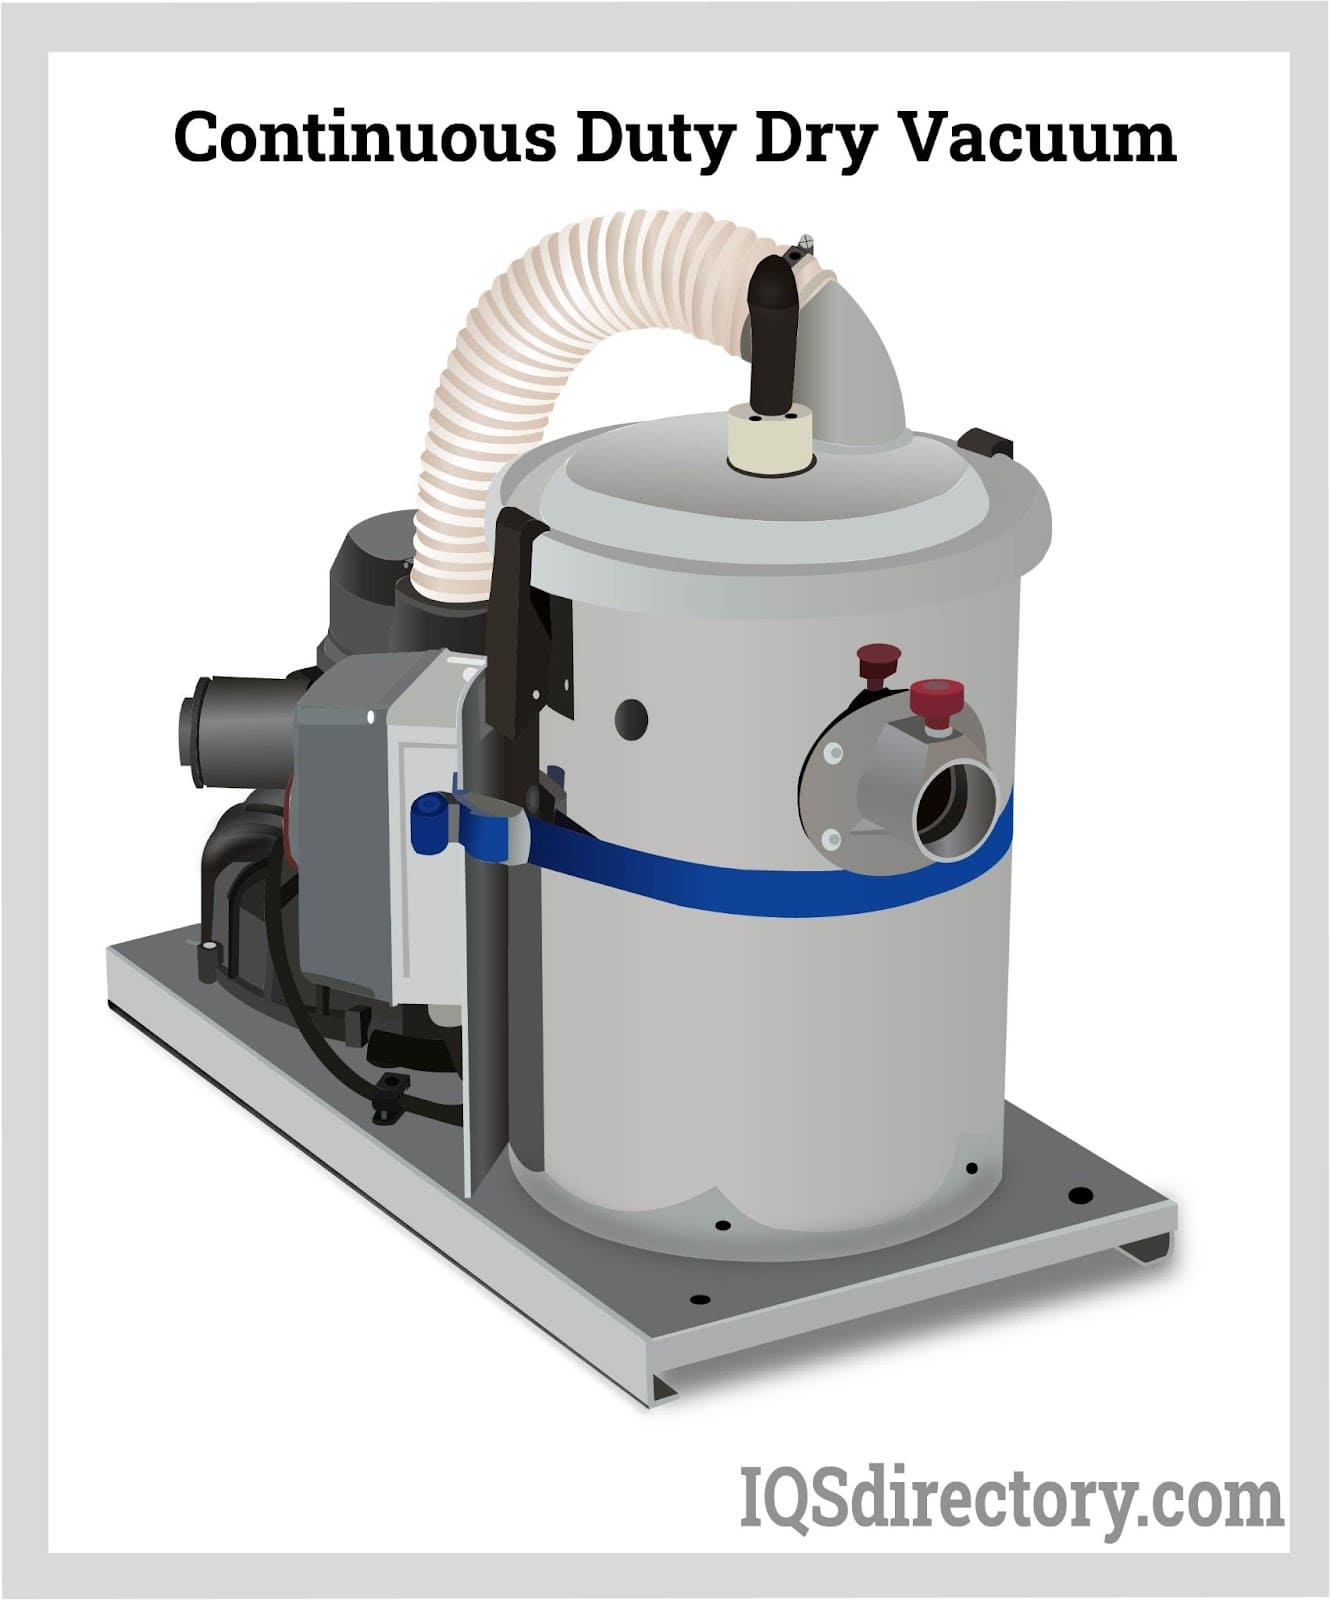 Continuous Duty Dry Vacuum